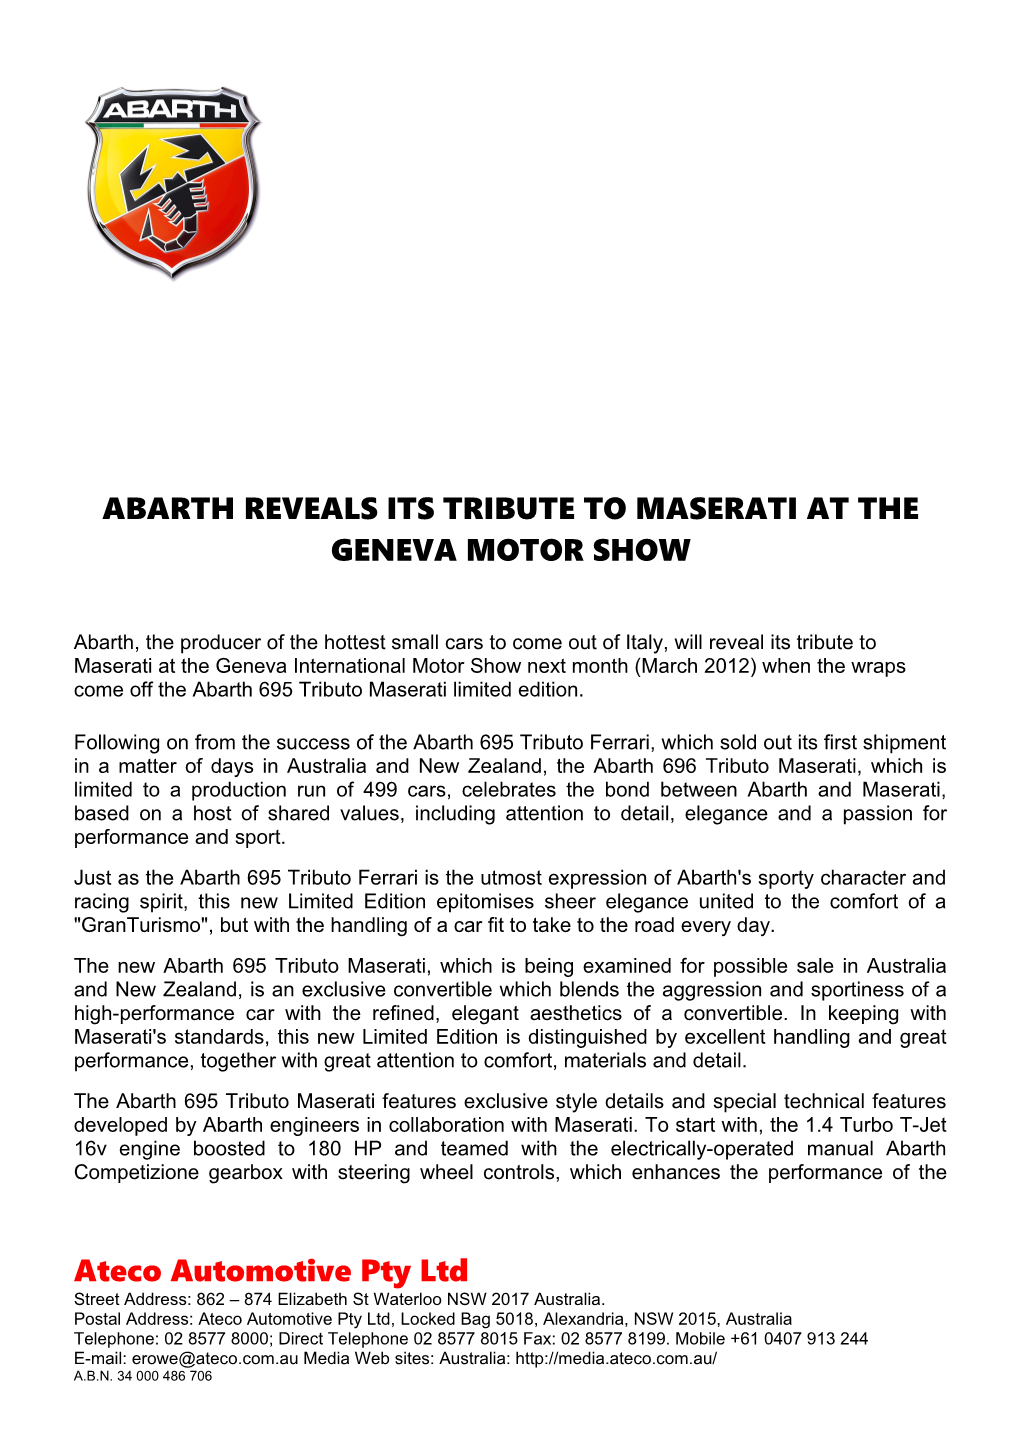 Abarth Reveals Its Tribute to Maserati at the Geneva Motor Show